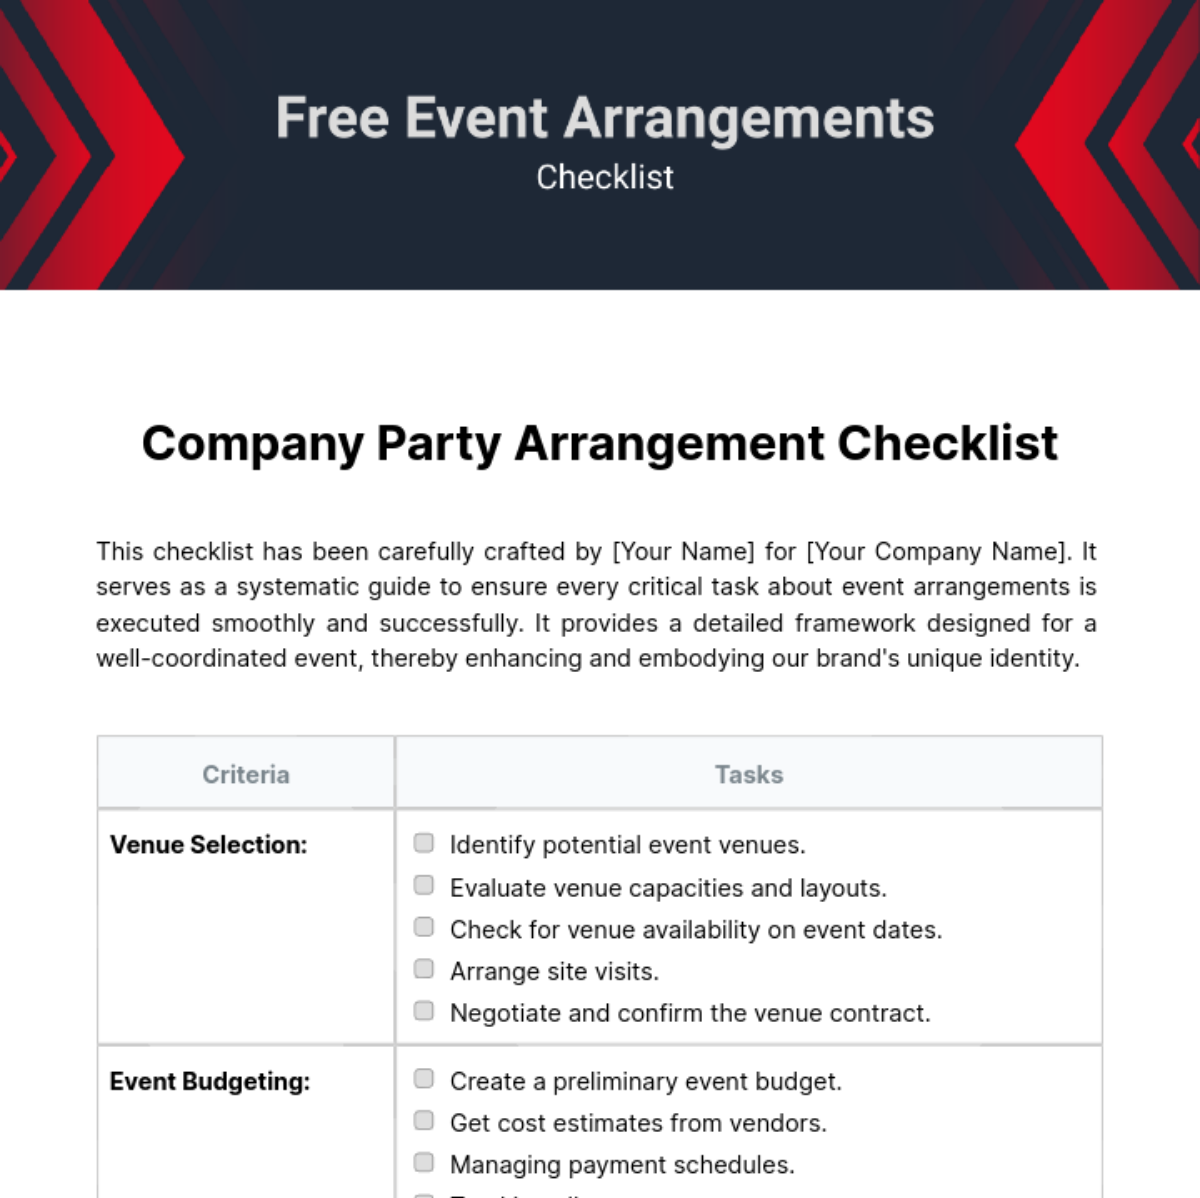 Free Event Arrangements Checklist Template